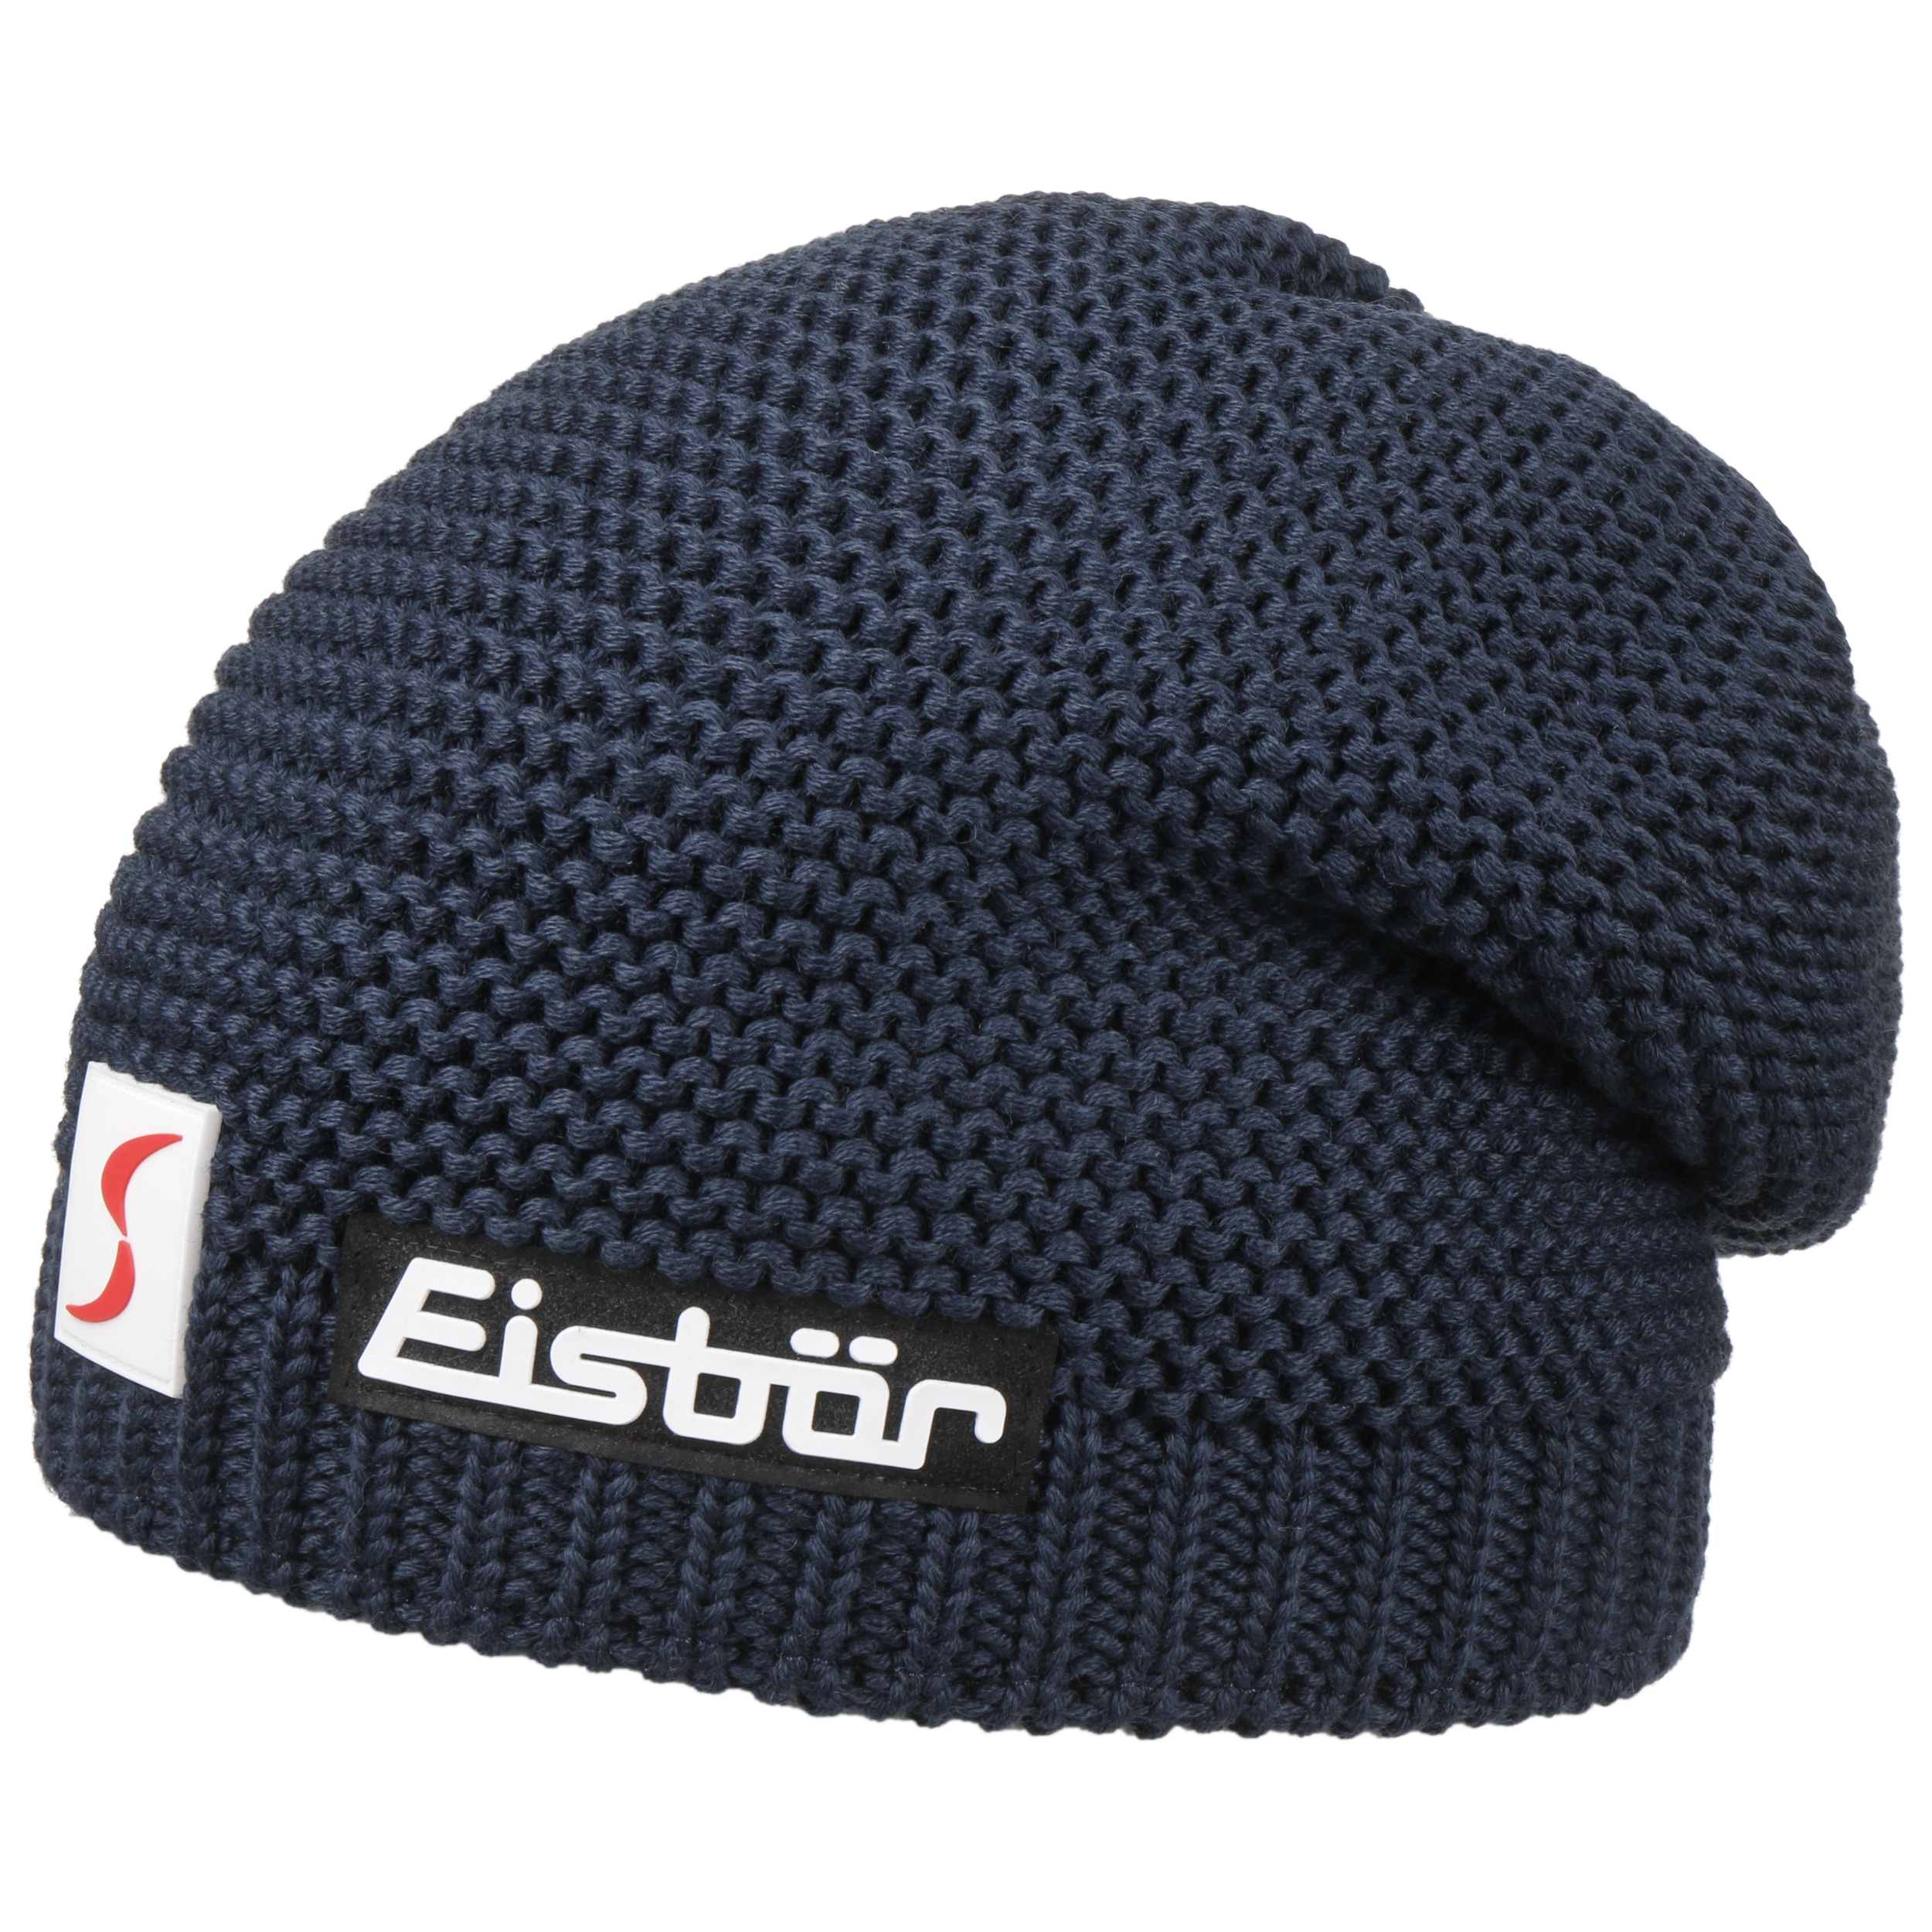 Corson Knit Beanie Hat by Eisbär - 62,95